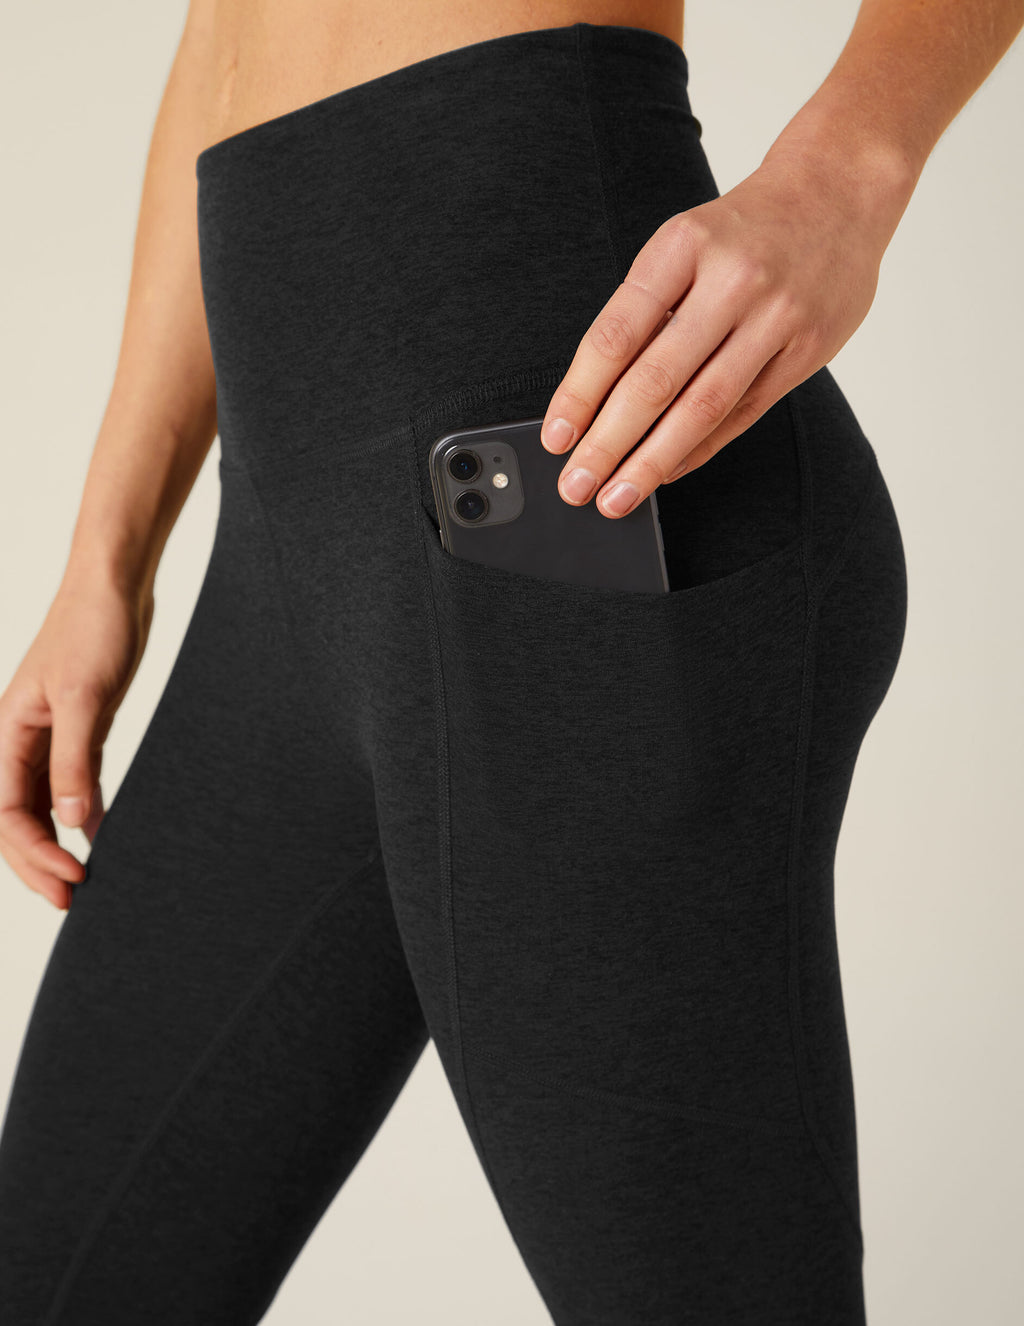 Midi Leggings 7/8 Calf Length Yoga Pants | Beyond Yoga